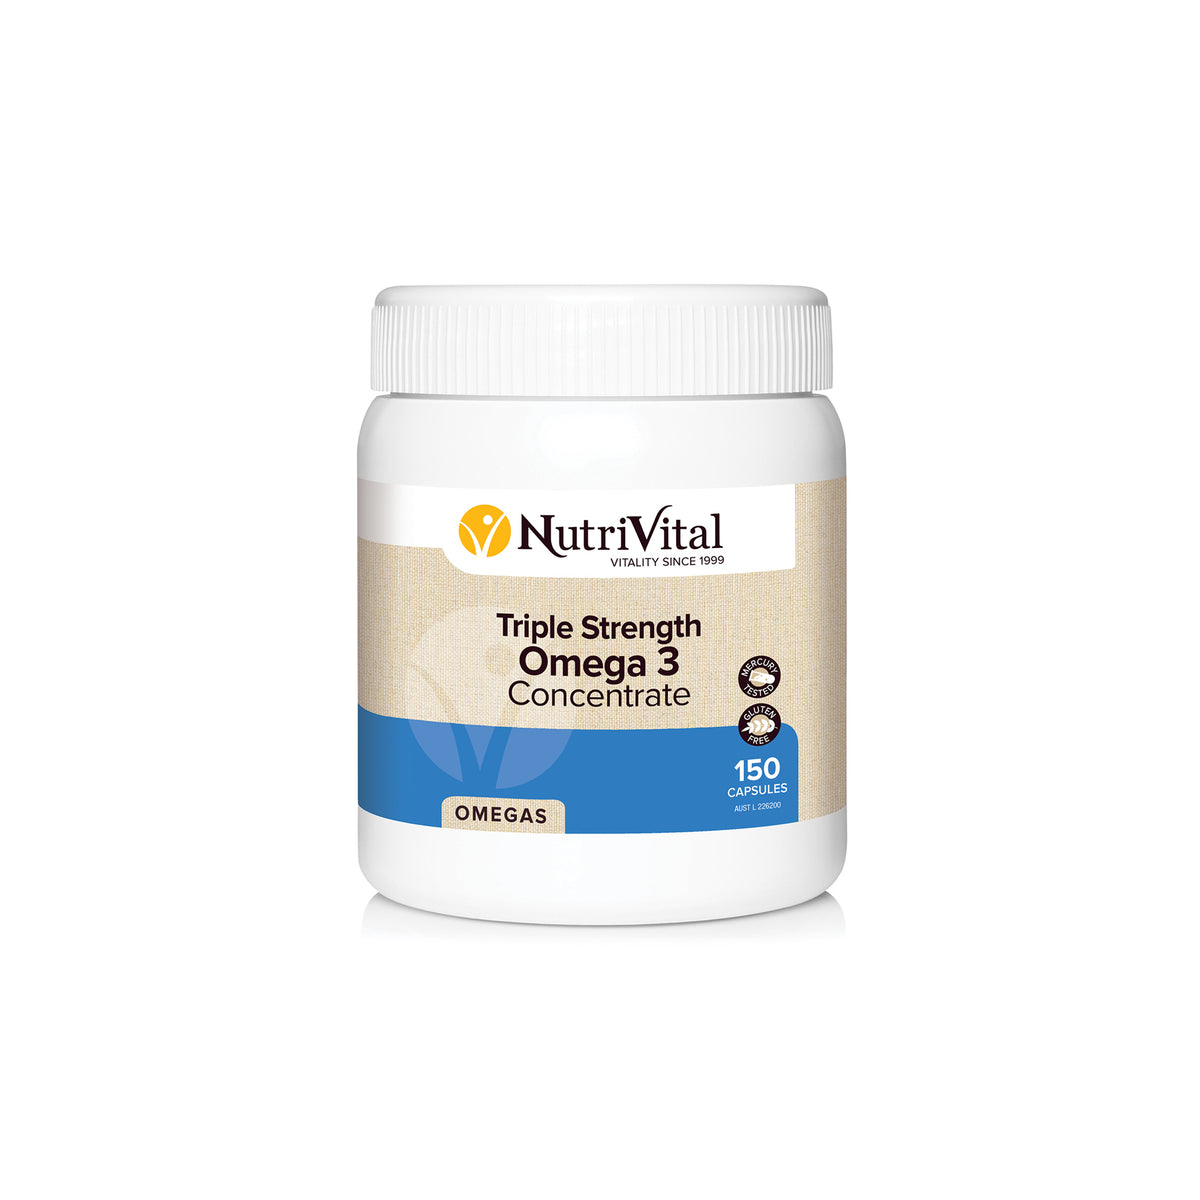 NutriVital Triple Strength Omega 3 Concentrate